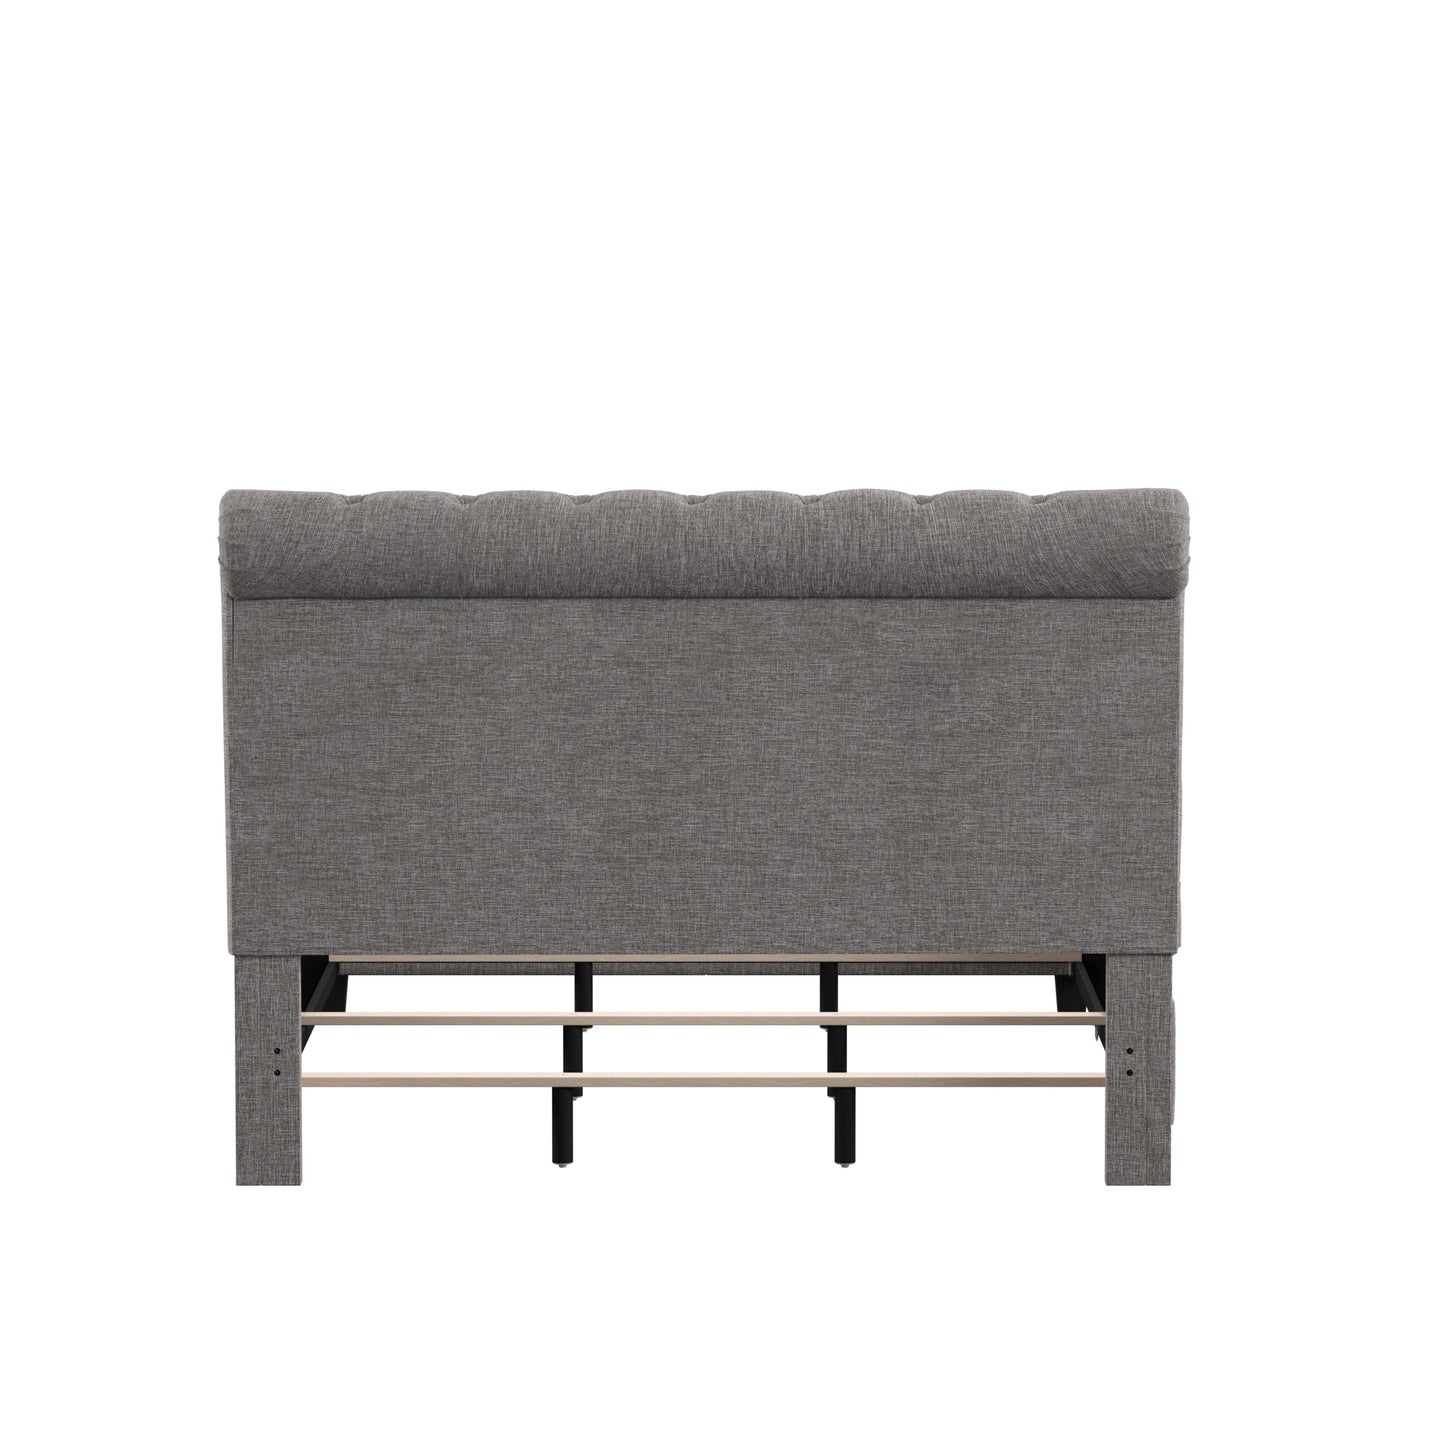 Adjustable Fabric Tufted Rolltop Queen Bed - Grey